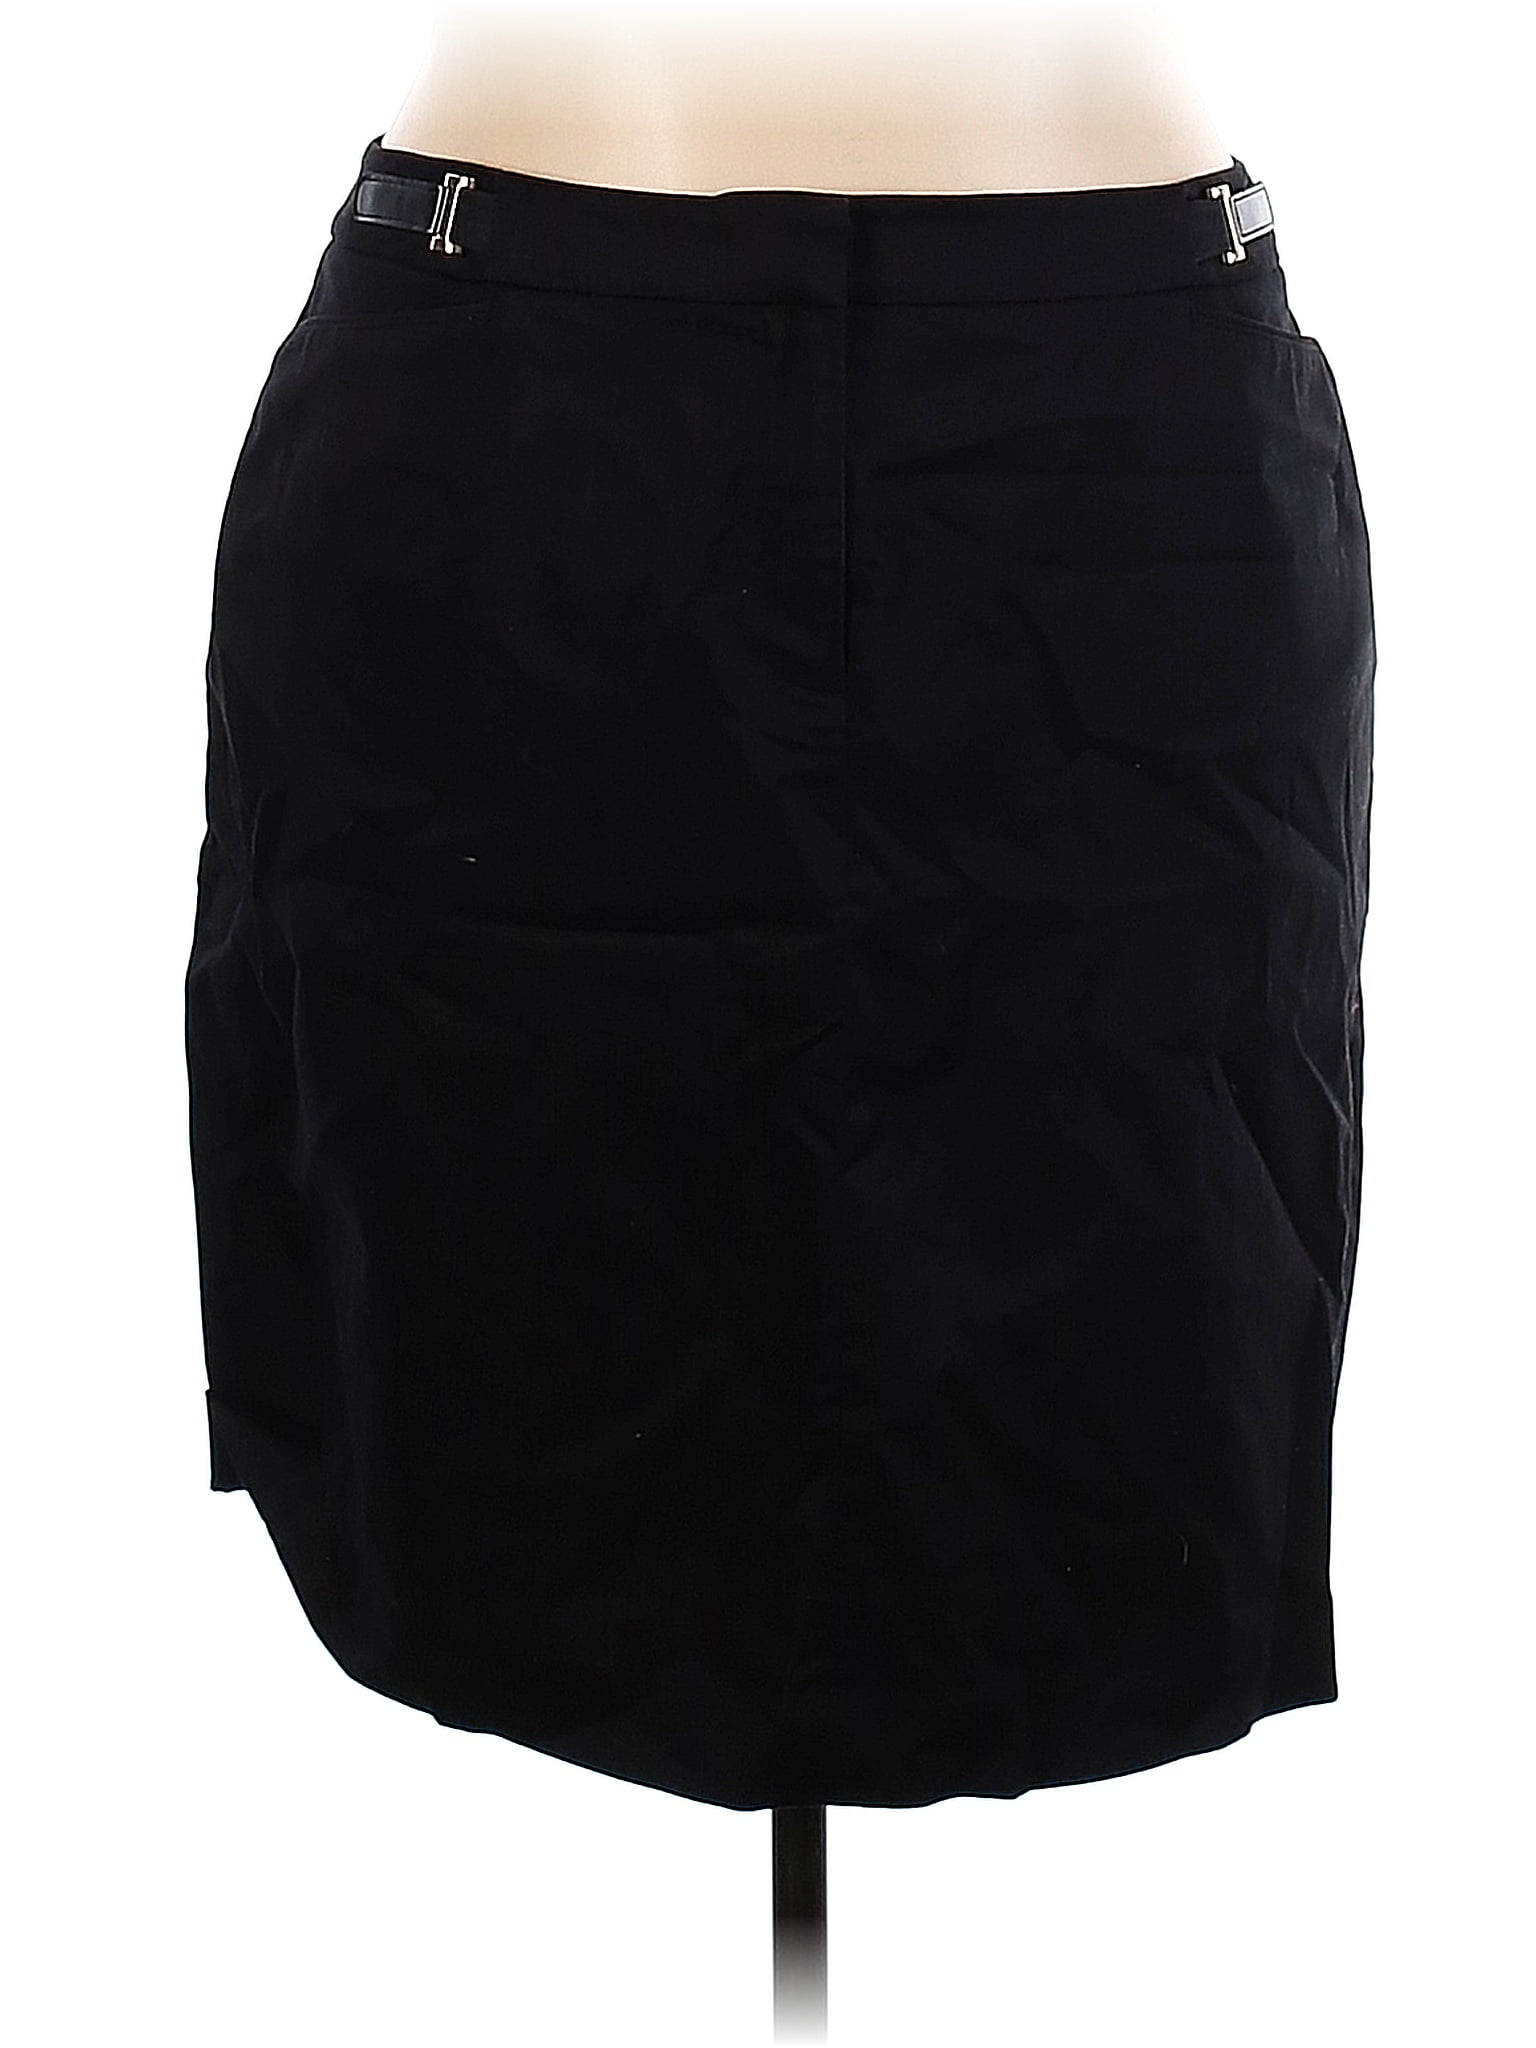 Jones New York Signature Solid Black Casual Skirt Size 18 (Plus) - 78% ...